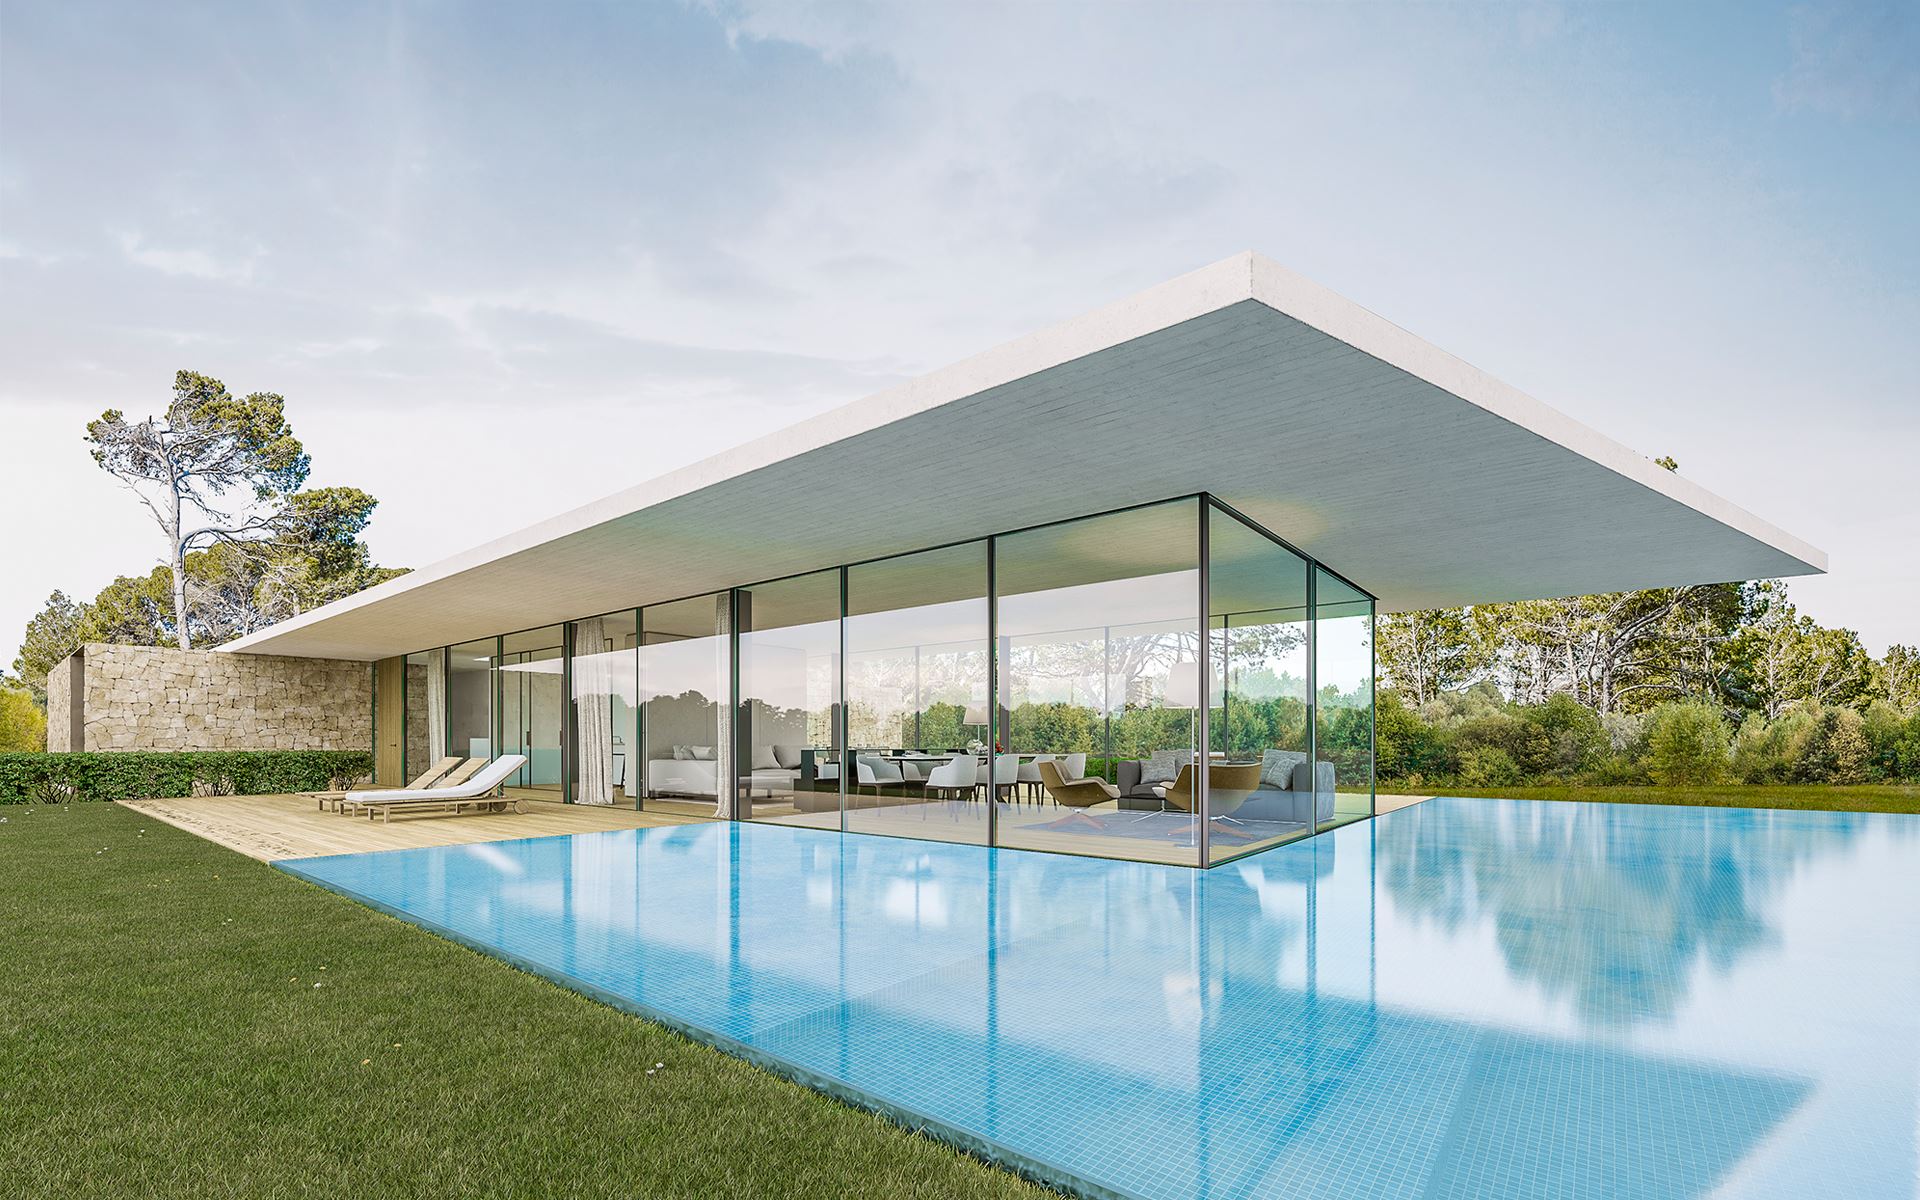 House in Valencia - Gallardo Llopis Architect